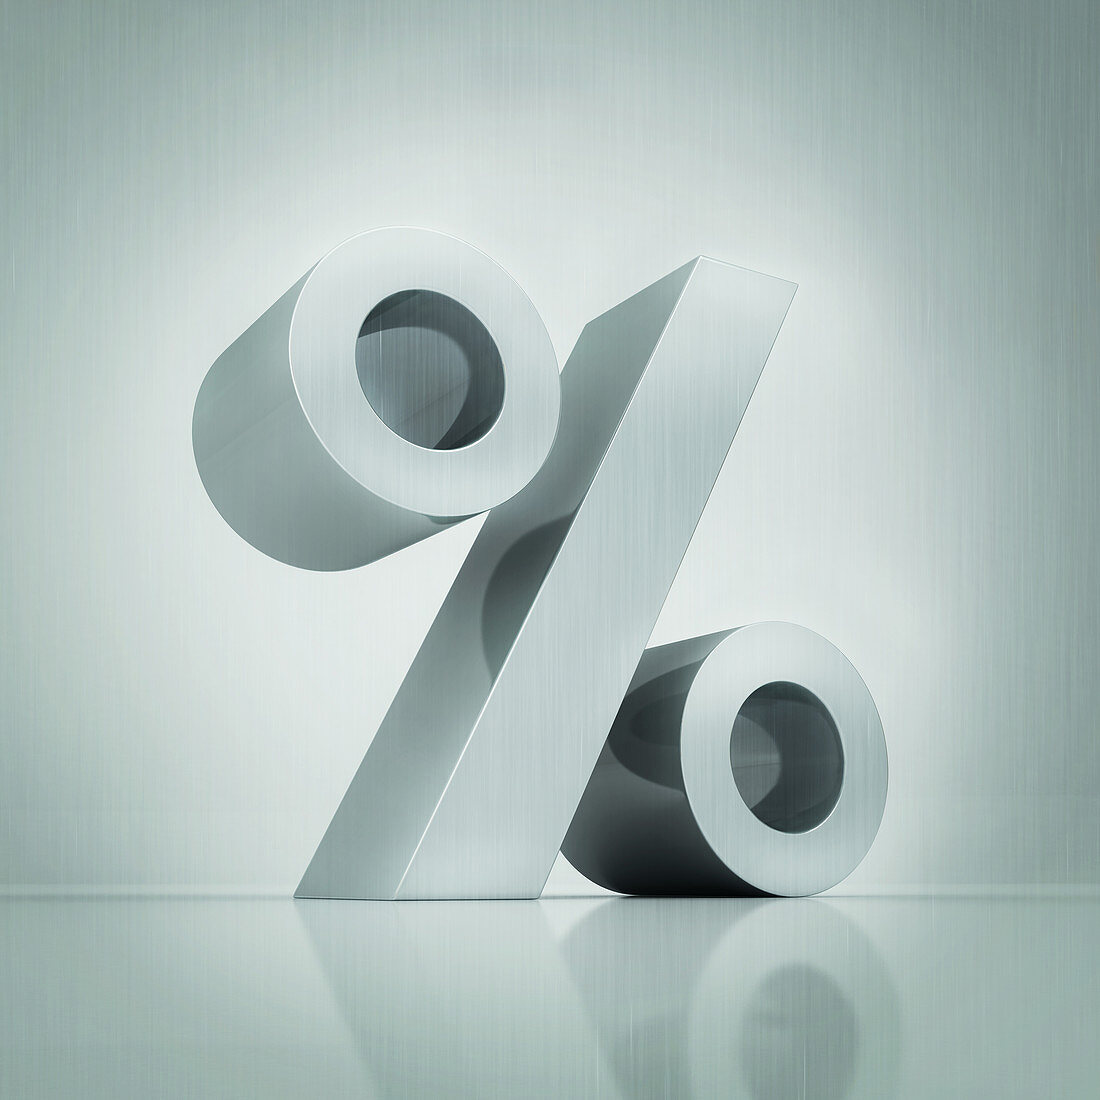 Illustration of percentage sign